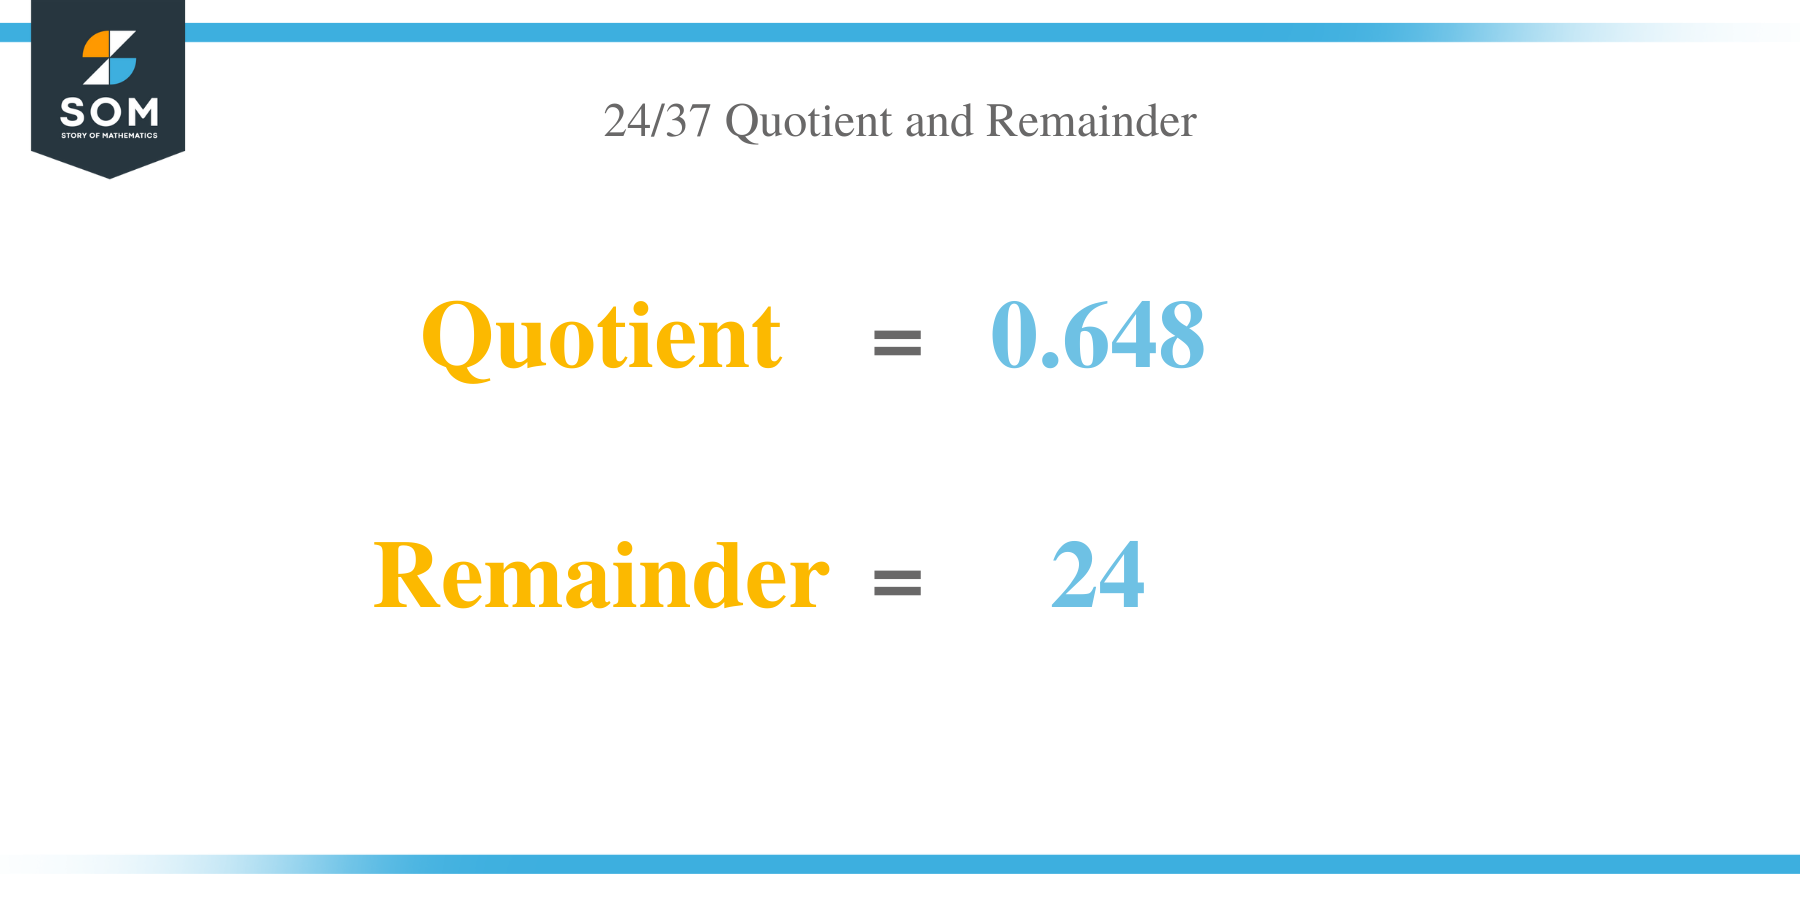 Quotient and Remainder of 24 per 37